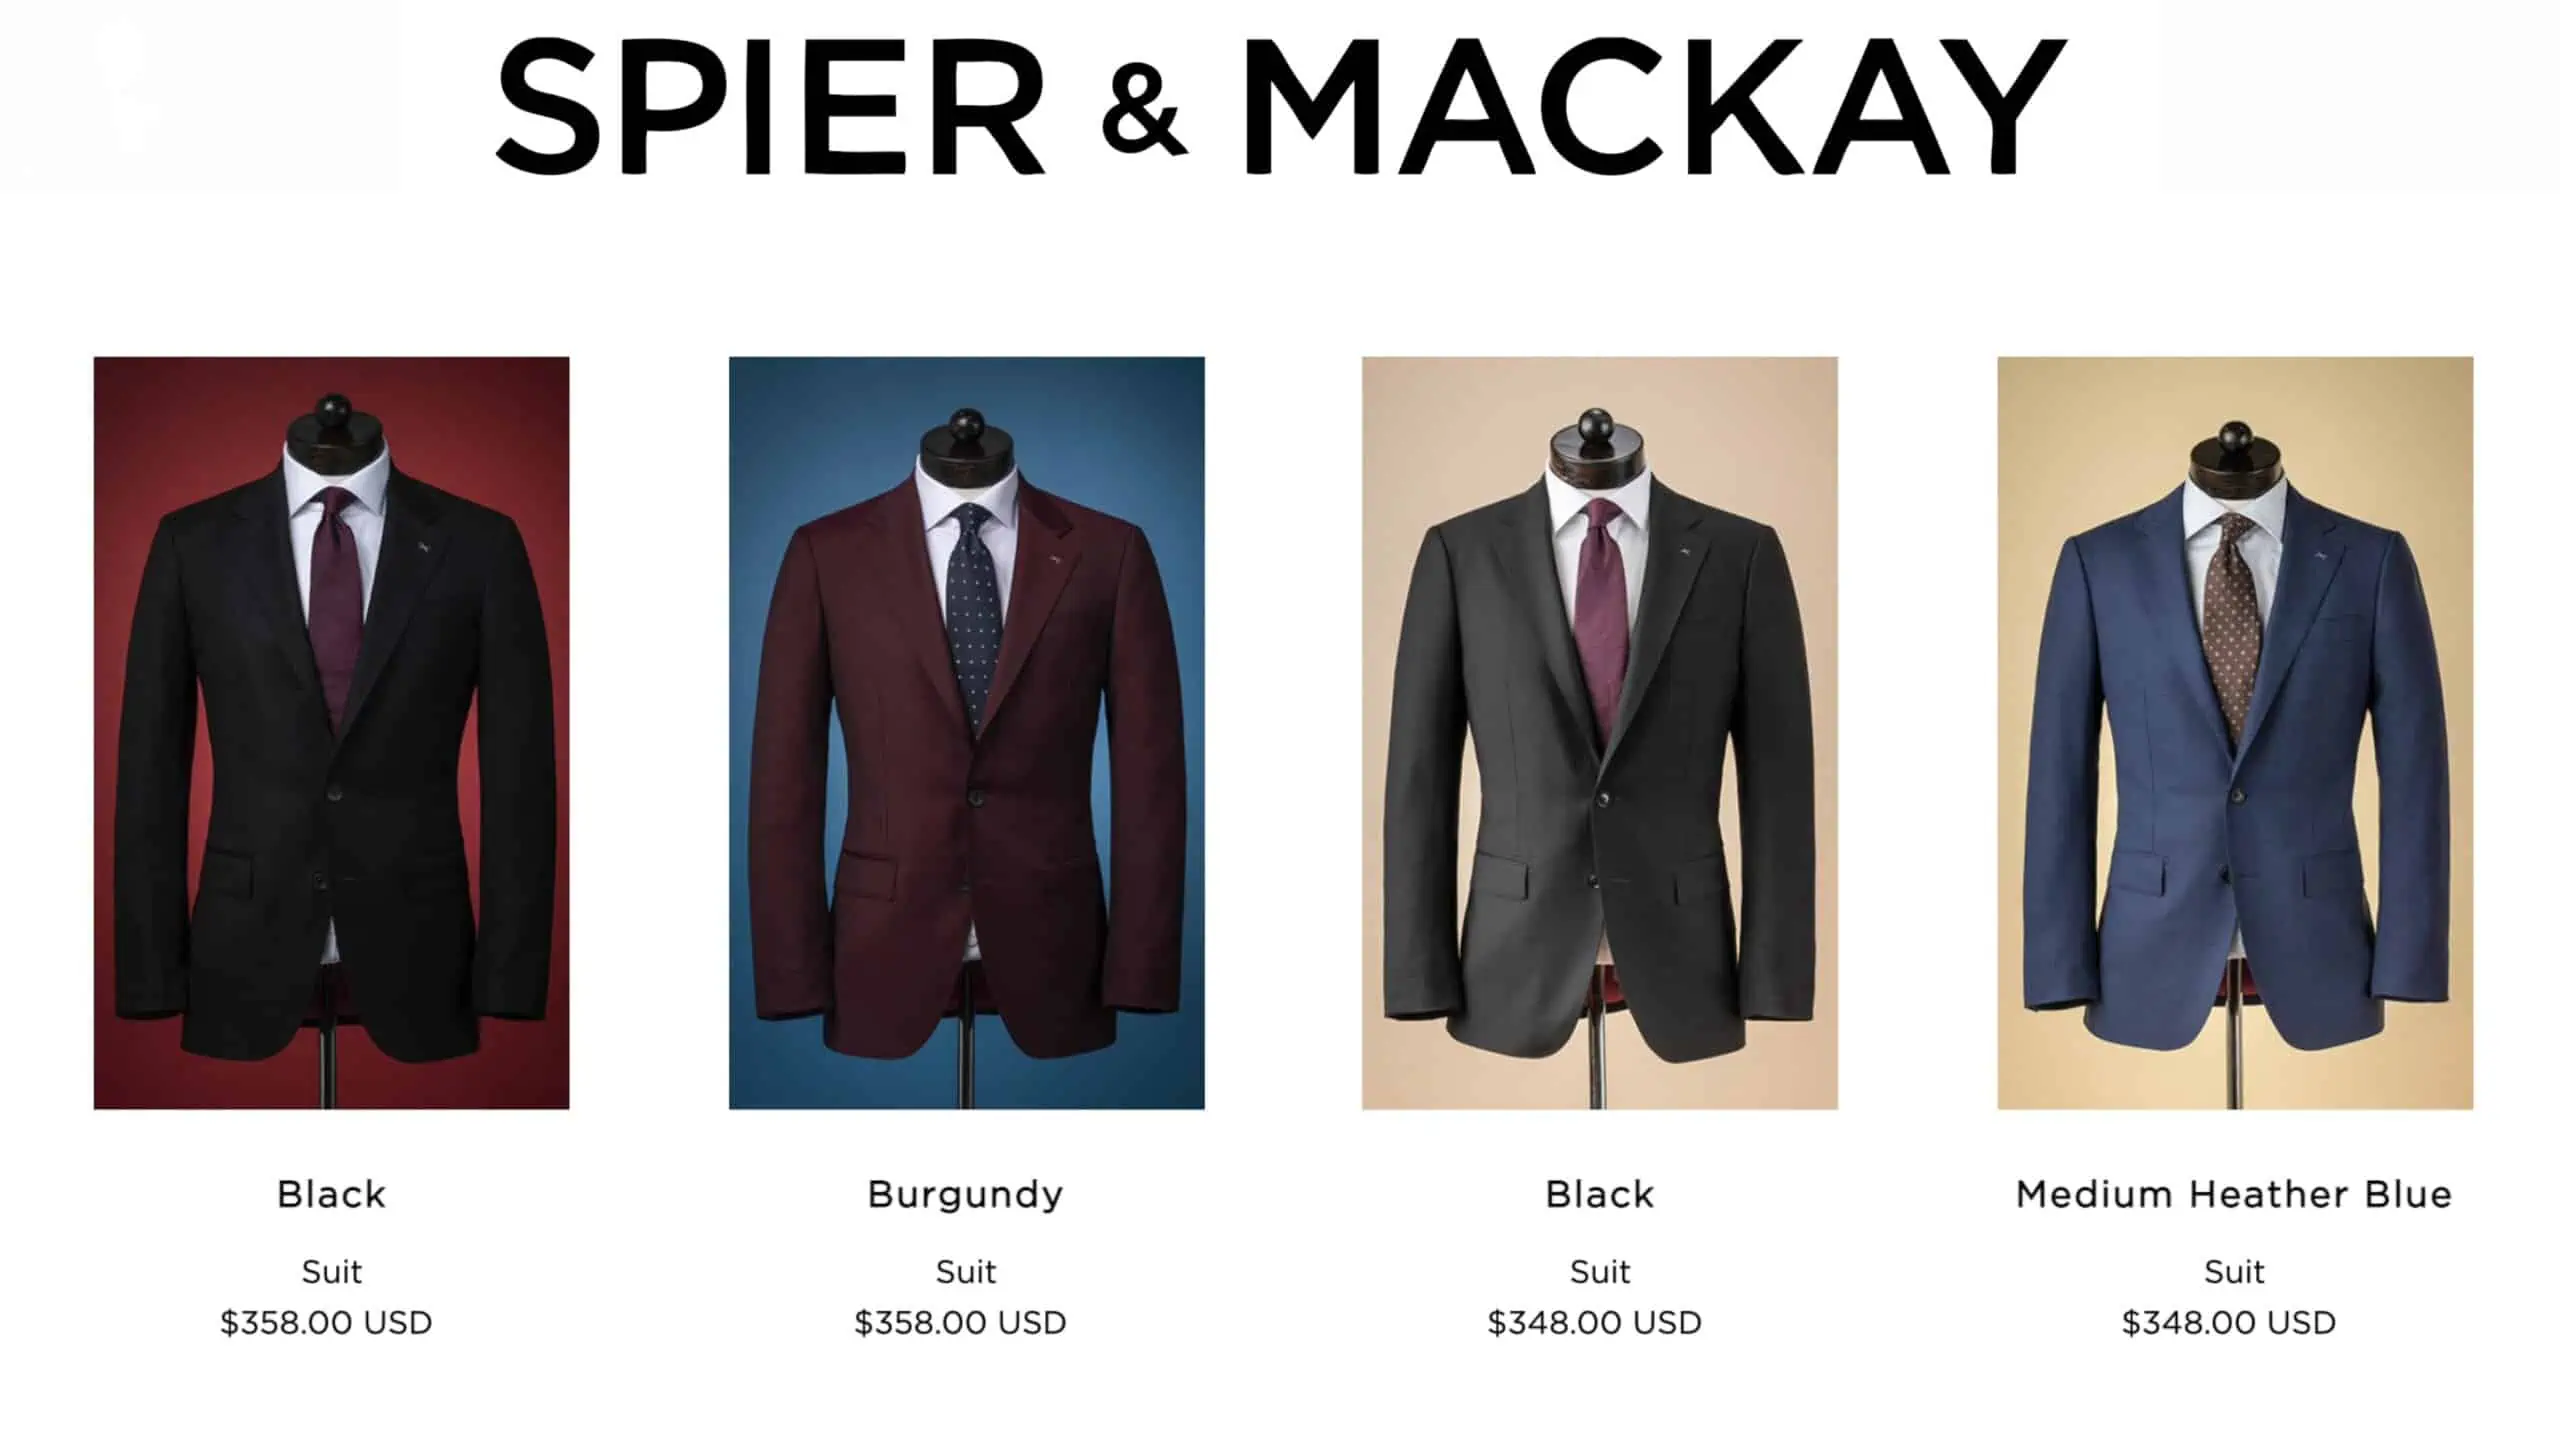 10 Best Men's Suit Brands To Buy The Most Stylish Suit Brands For Men ...